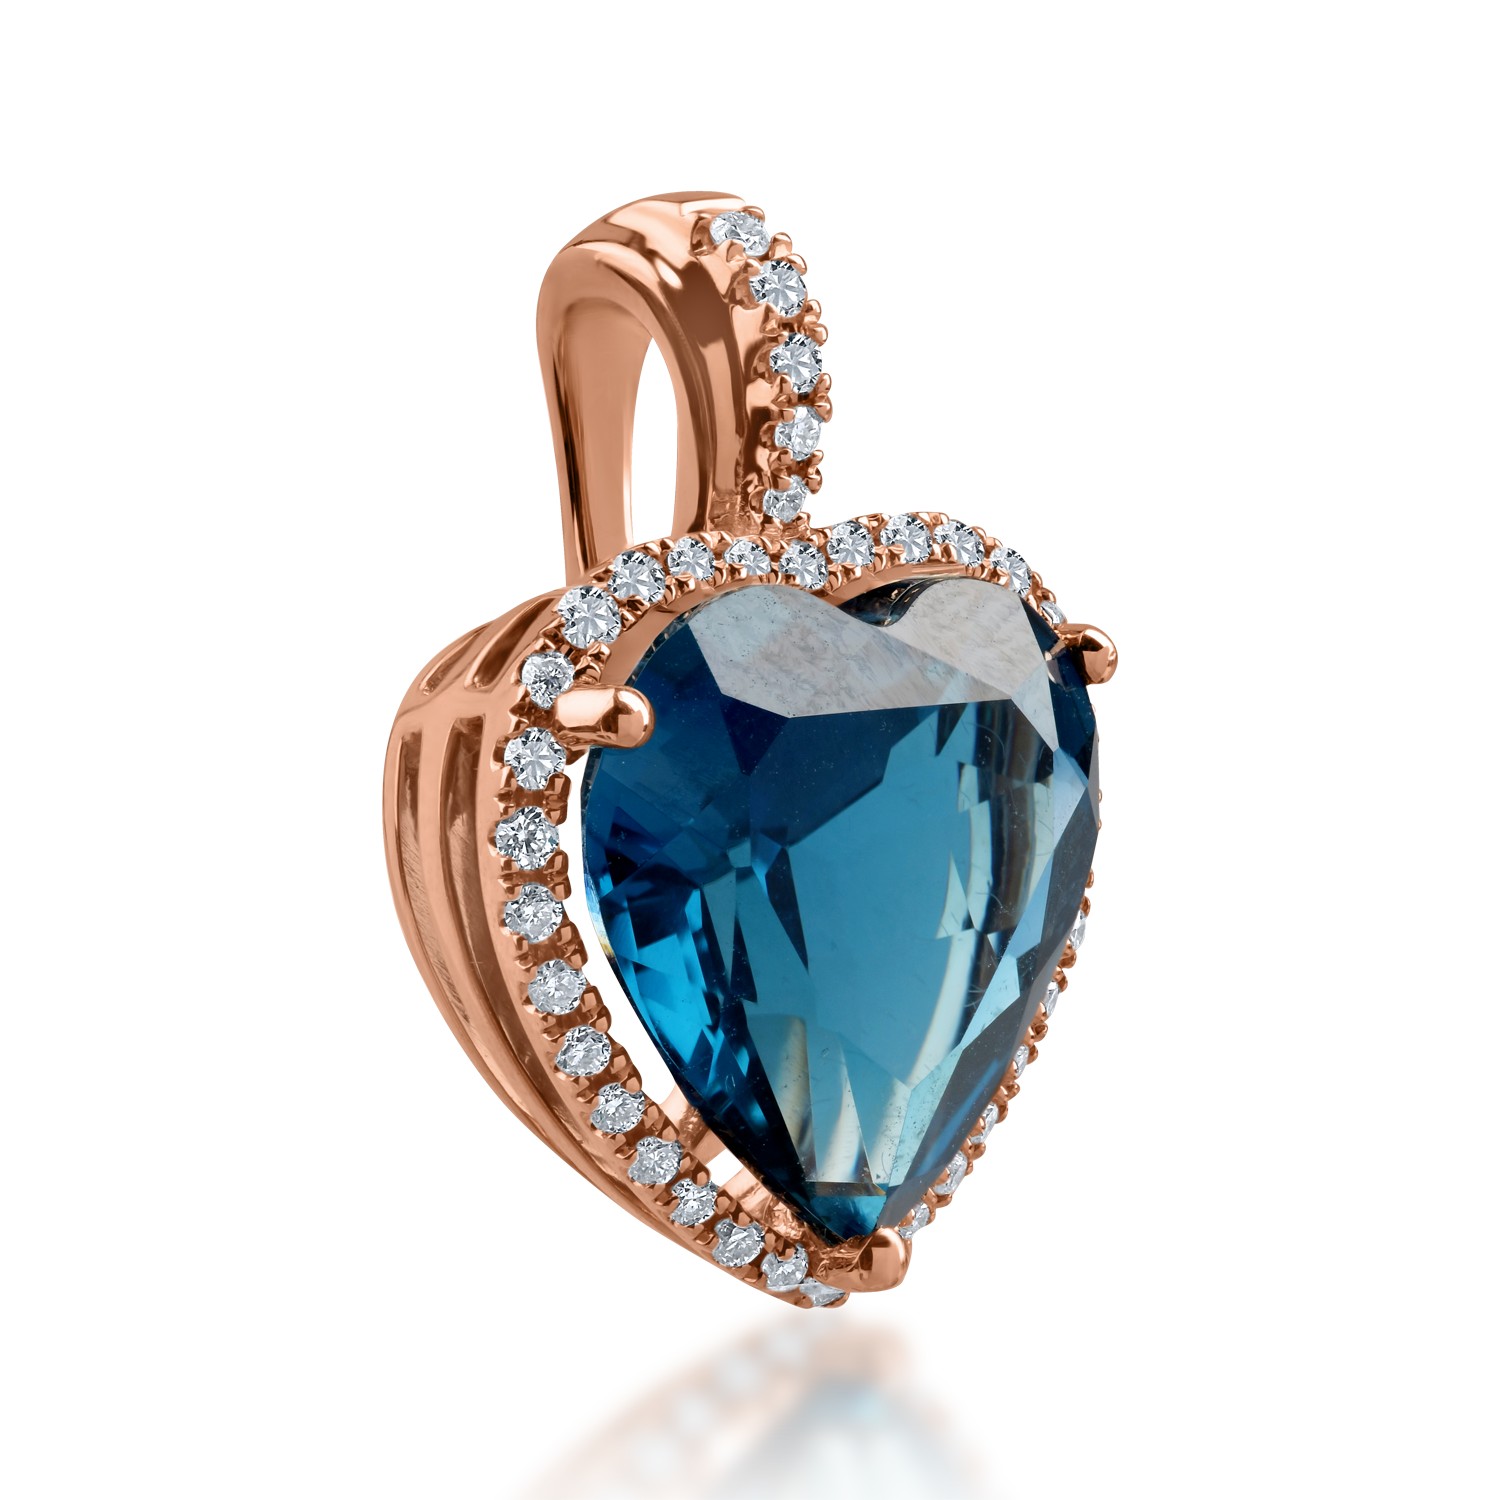 Pandantiv inima din aur roz cu topaz london blue de 5.4ct si diamante de 0.16ct